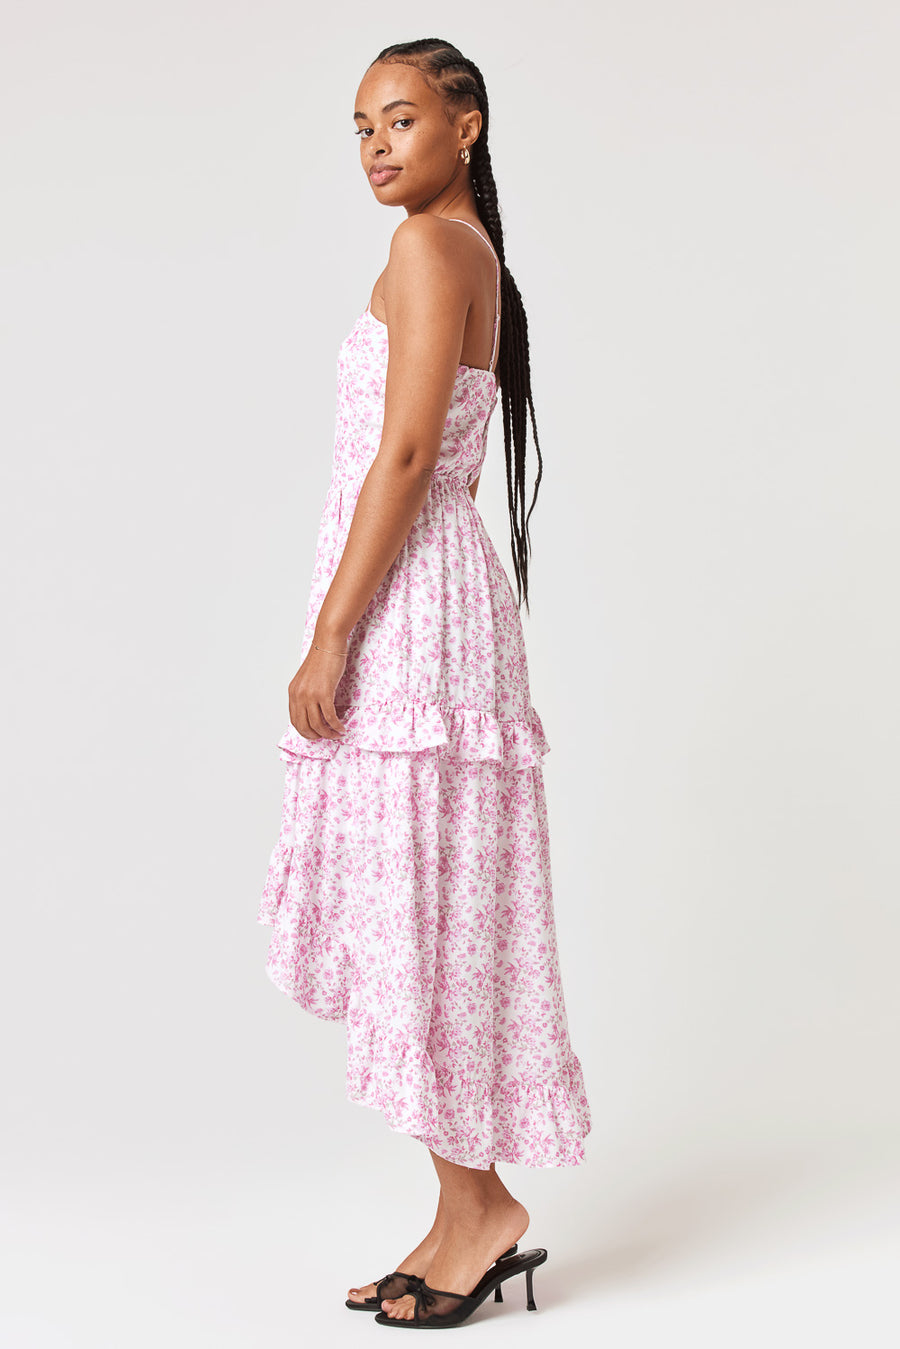 White Pink Floral Hi-Low Midi Dress - Trixxi Clothing